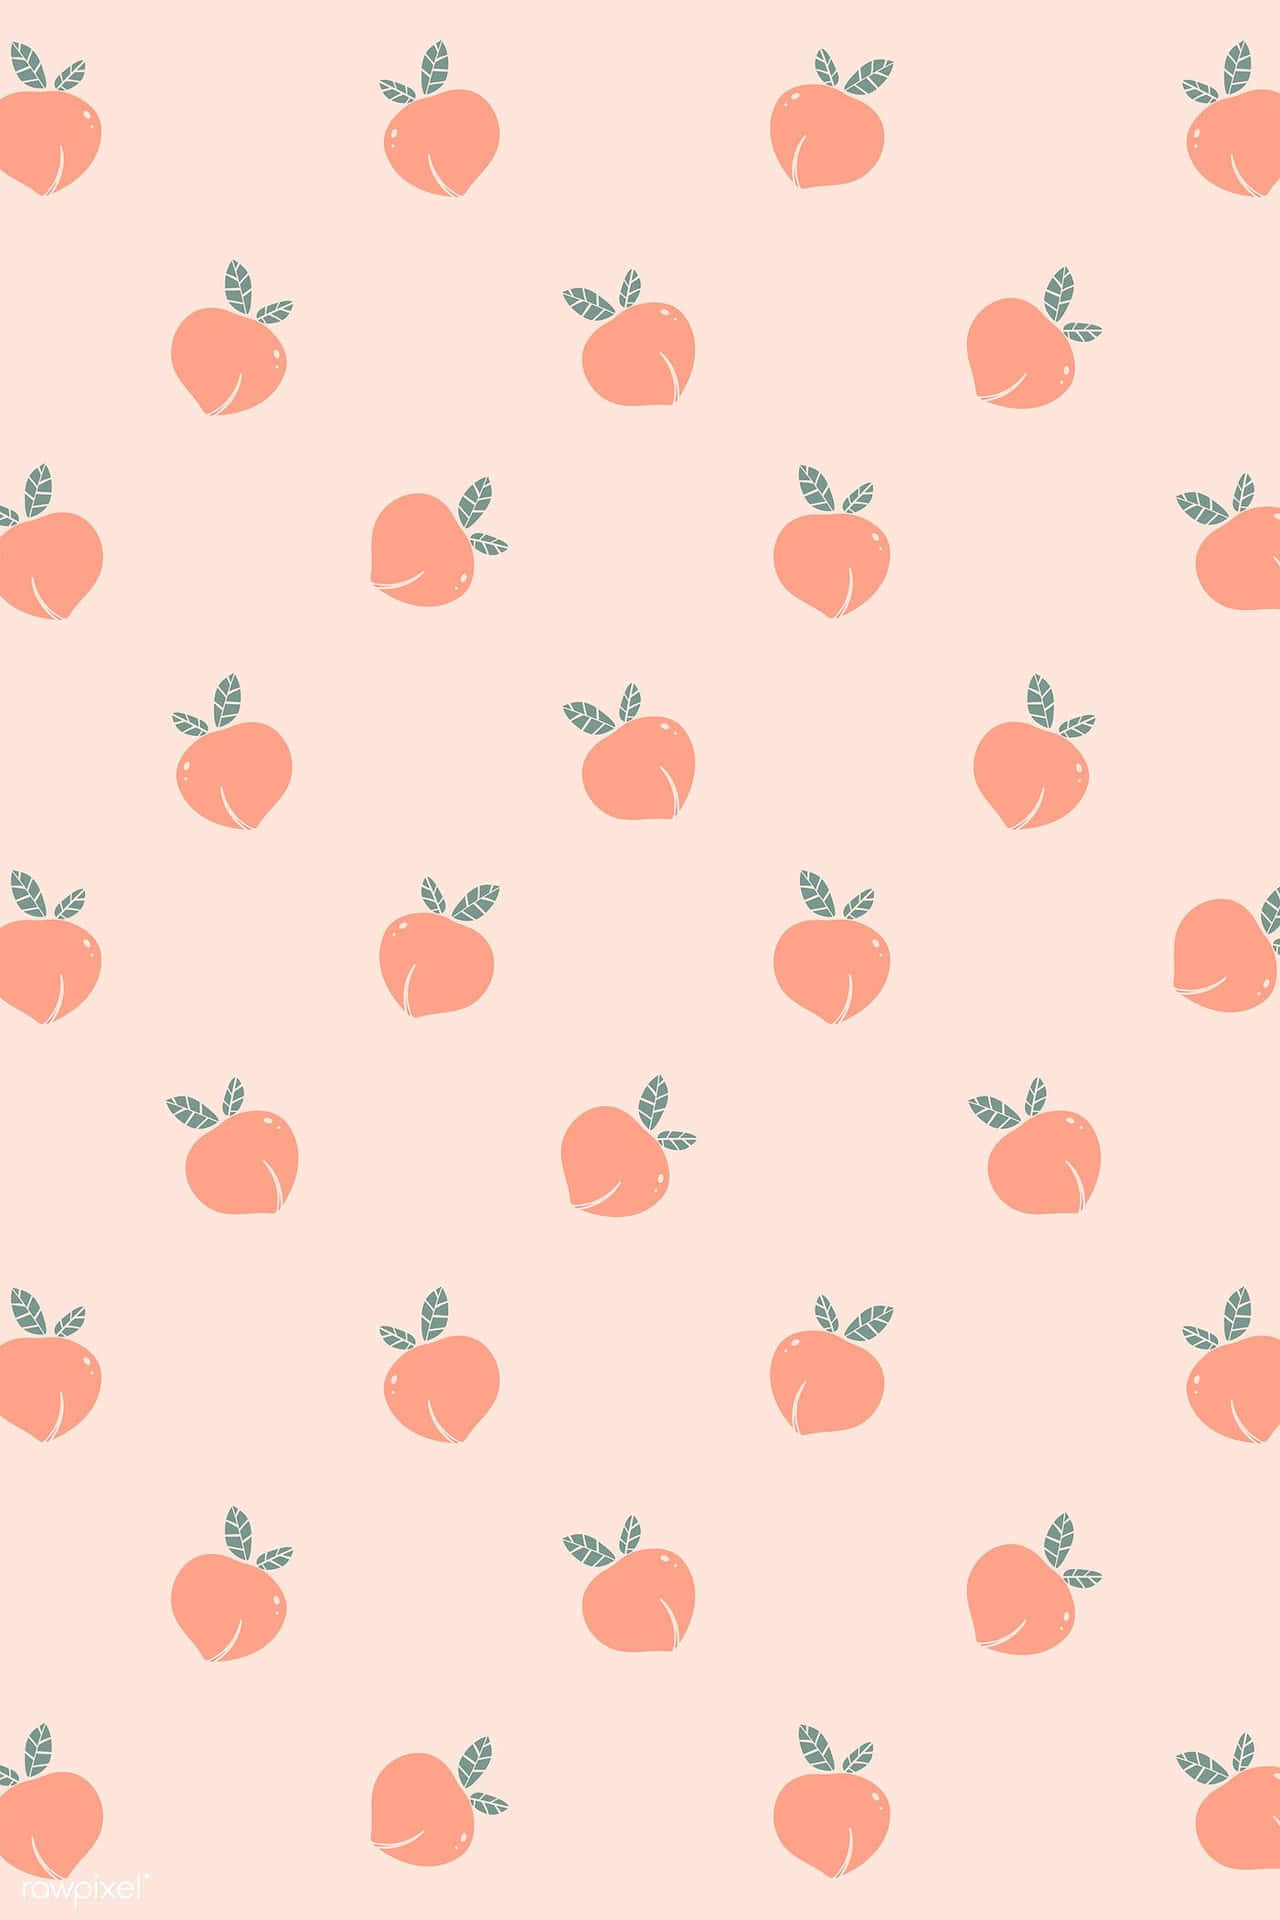 wallpaper aesthetic peach  Peach wallpaper Hello beautiful Peach  aesthetic